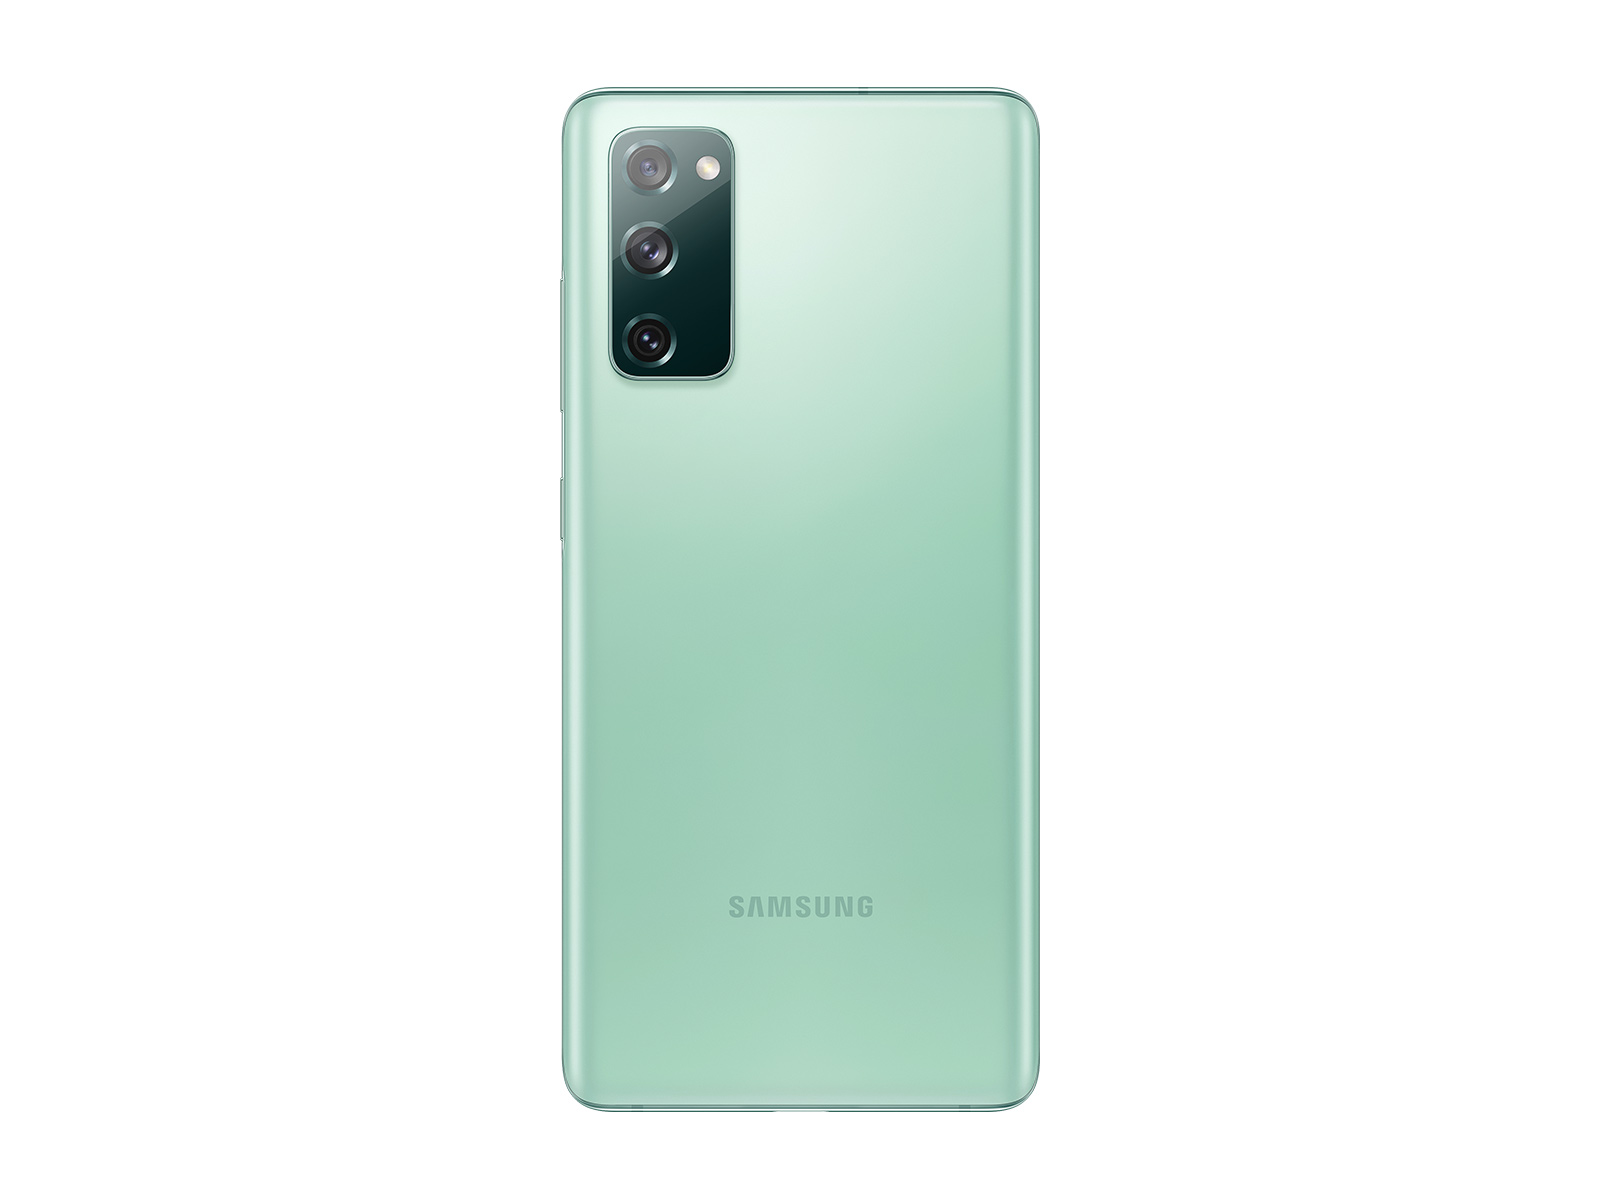 Galaxy S20 Fe 5g Uw 128gb Verizon Phones Sm G781vzgavzw Samsung Us